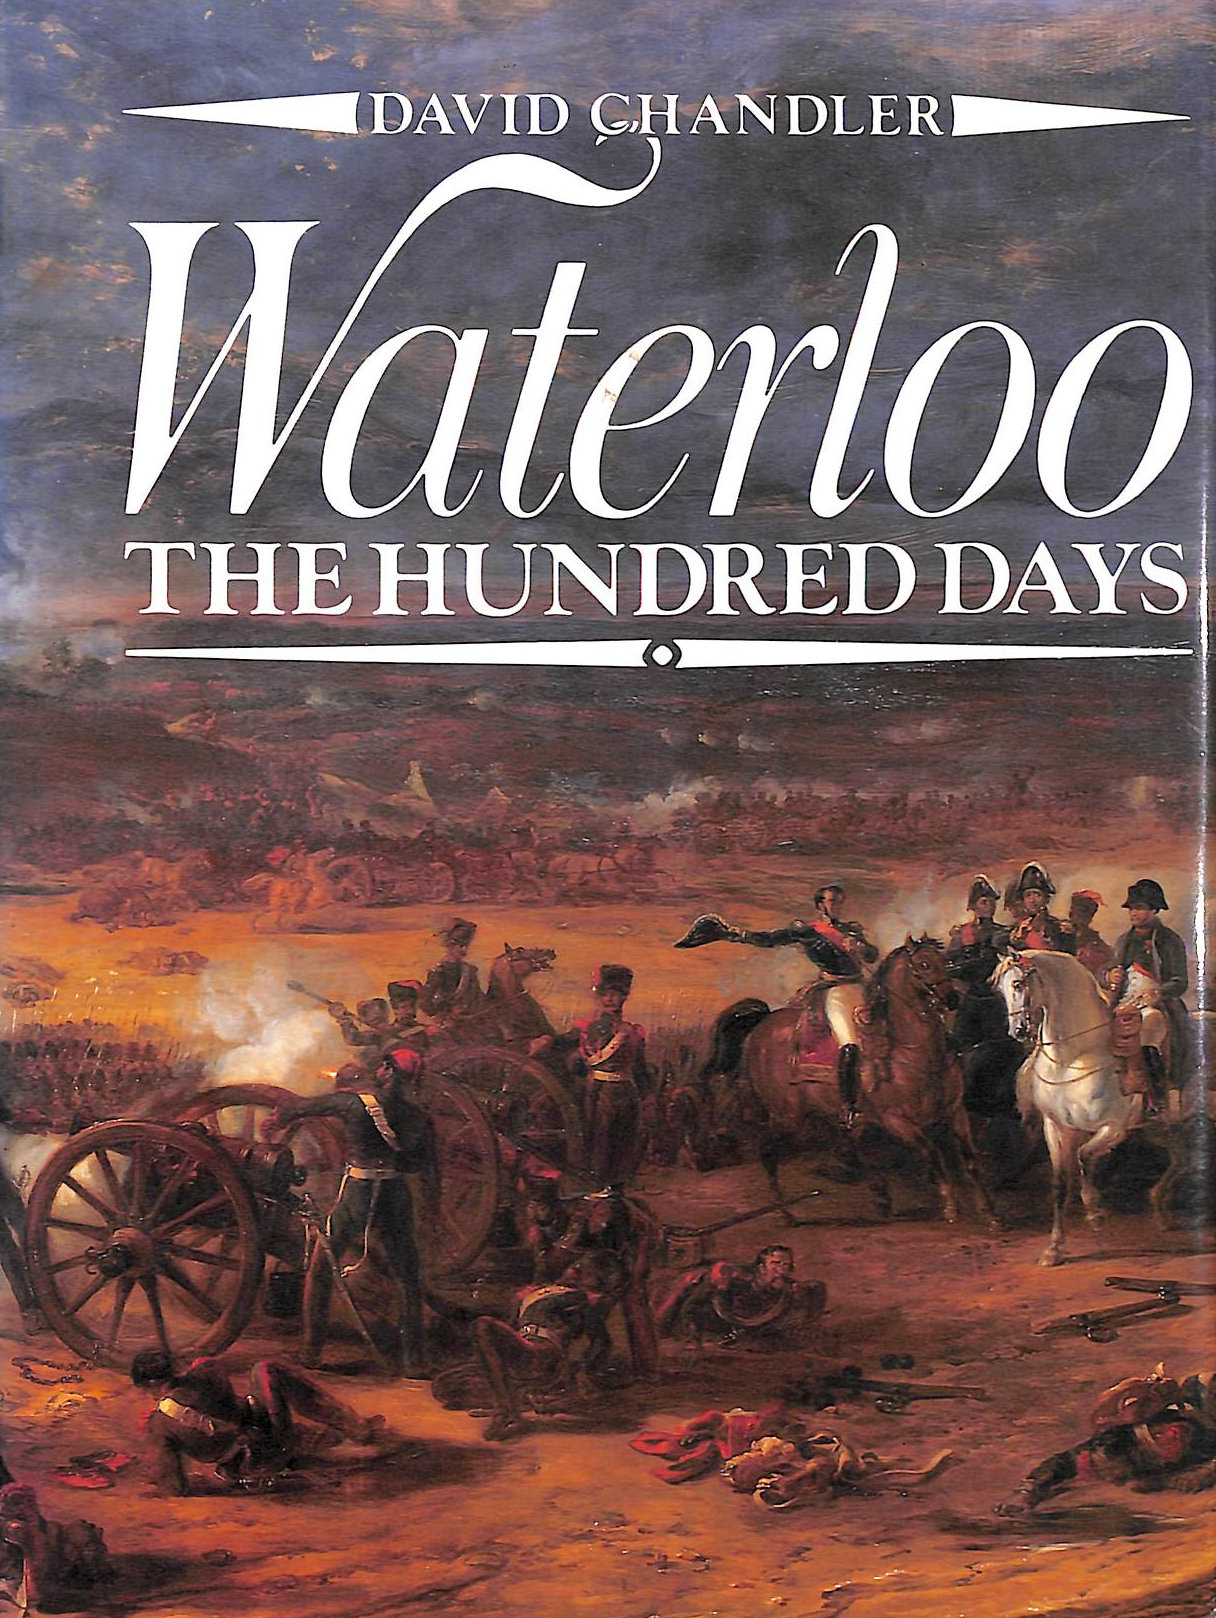 CHANDLER, DAVID - Waterloo: The Hundred Days